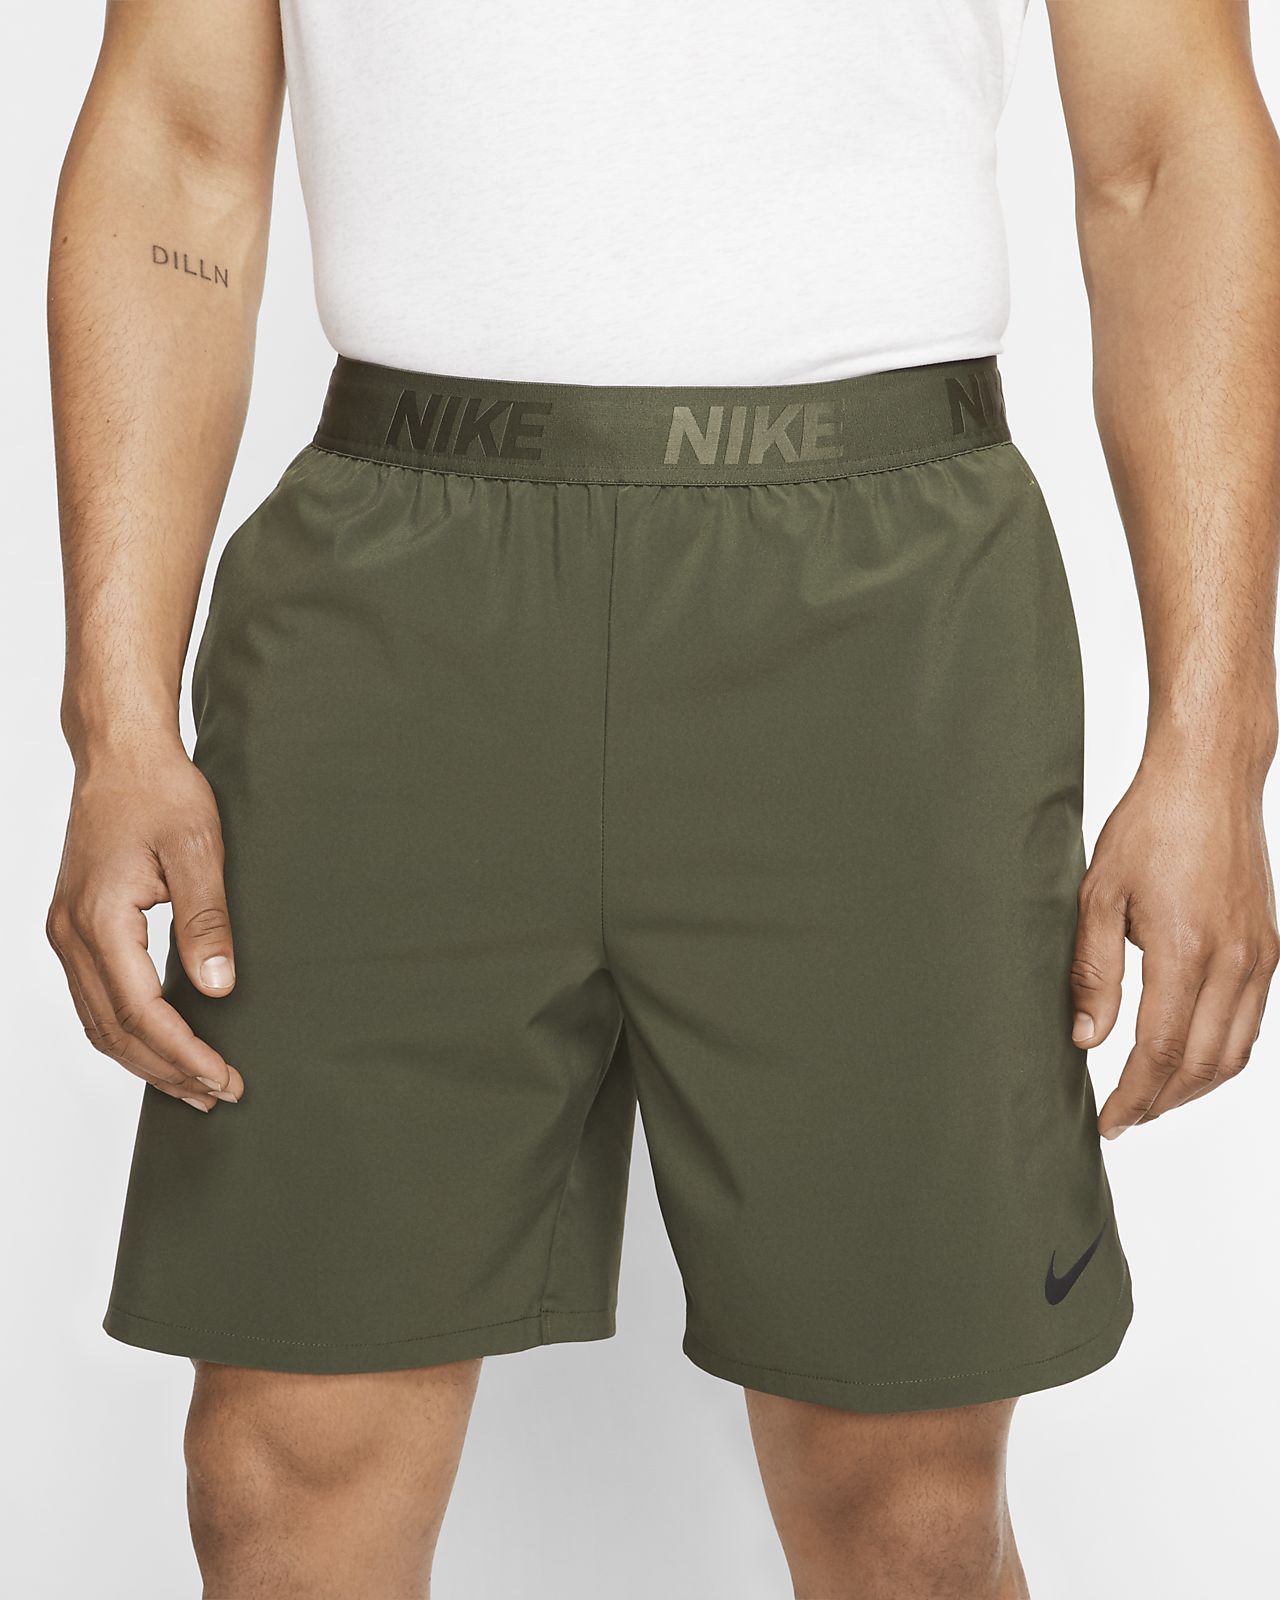 men's 21cm training shorts nike flex